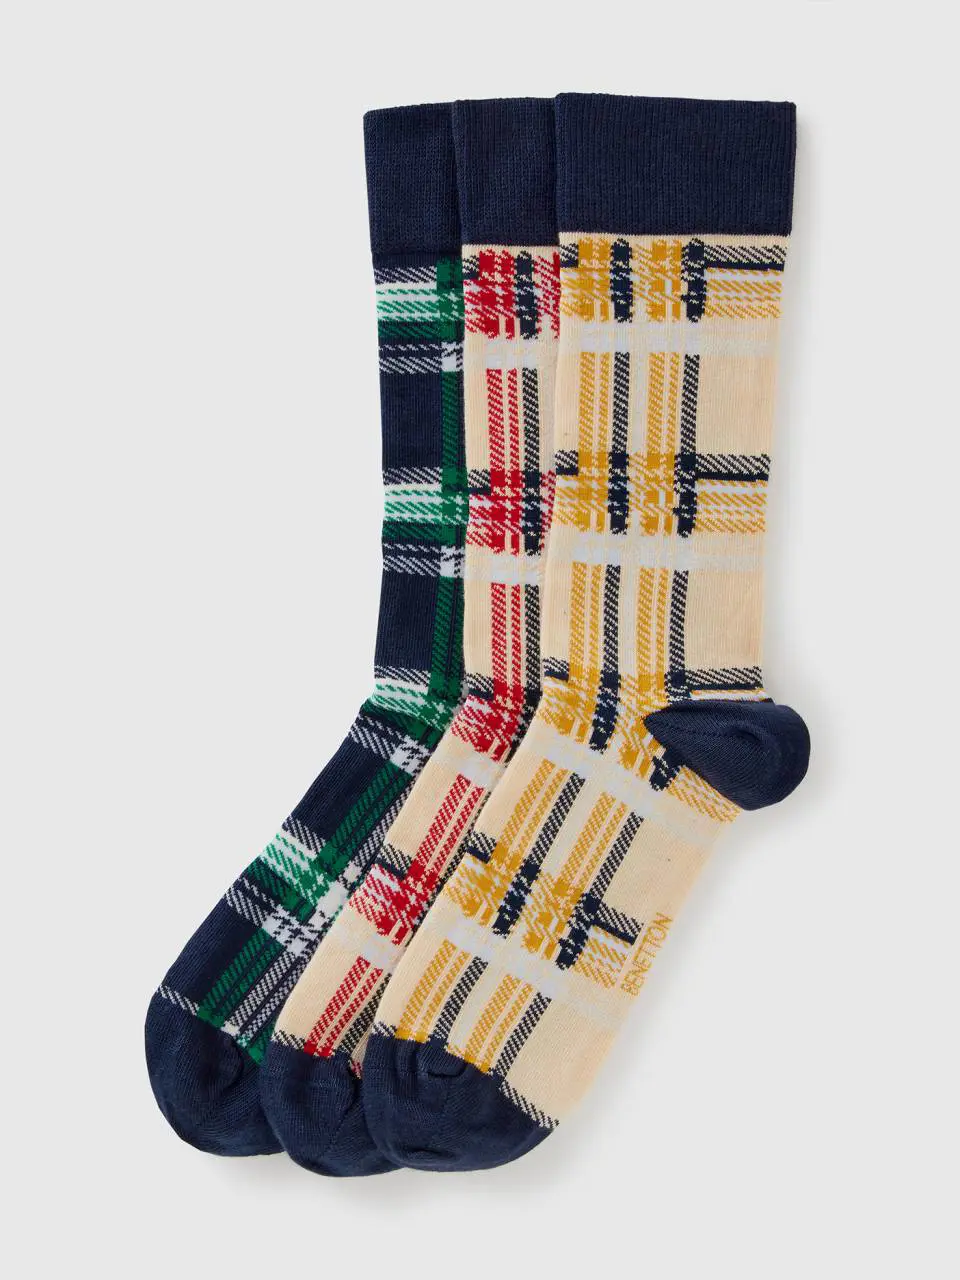 Benetton long tartan socks. 1